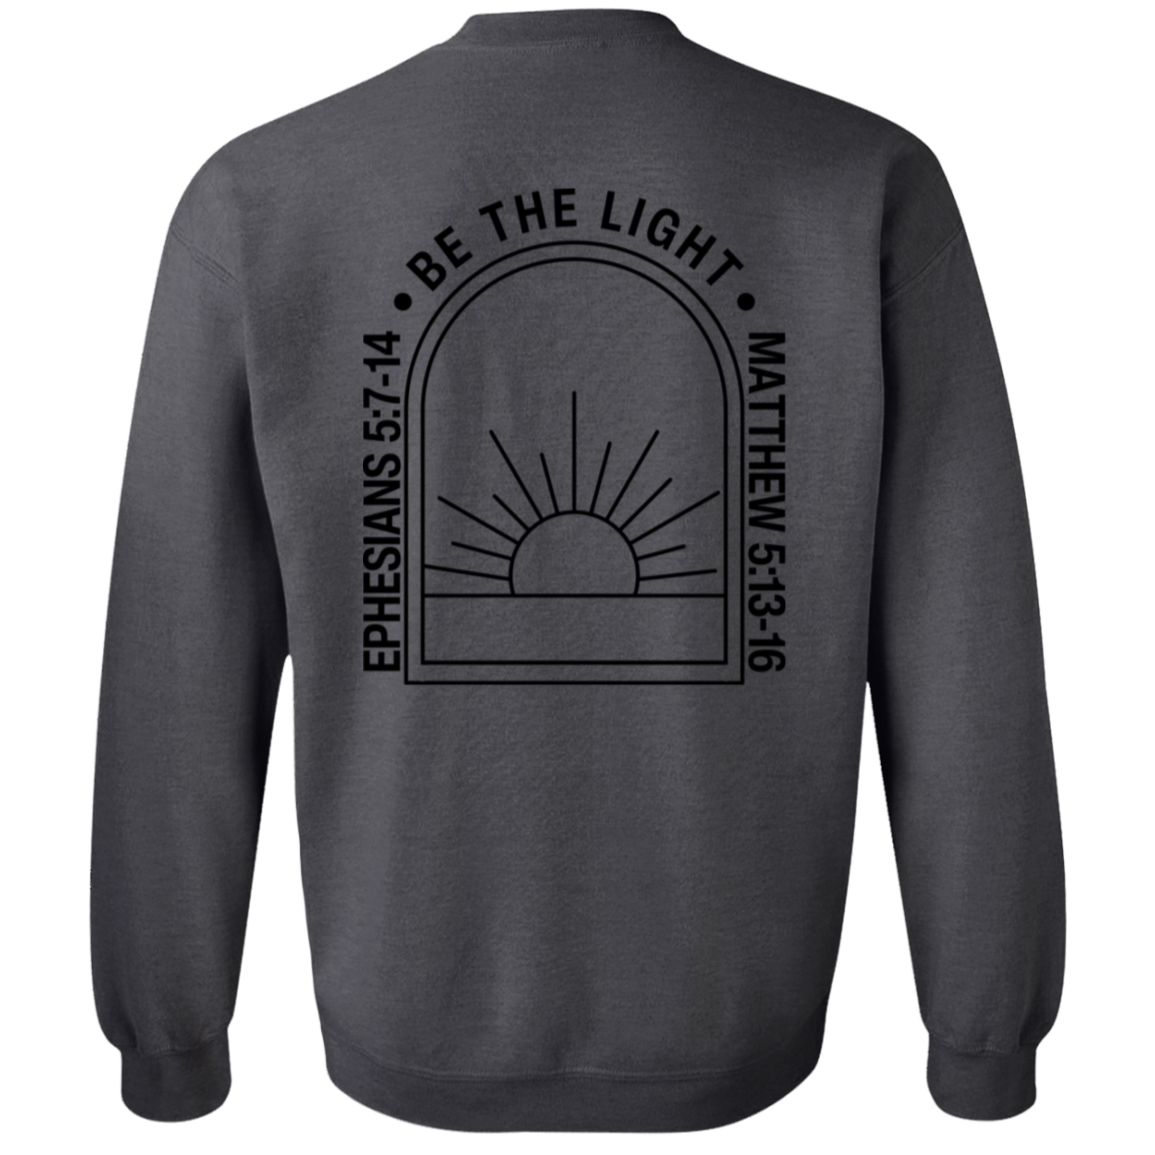 BE THE LIGHT SWEATSHIRT, bible verse sweatshirt